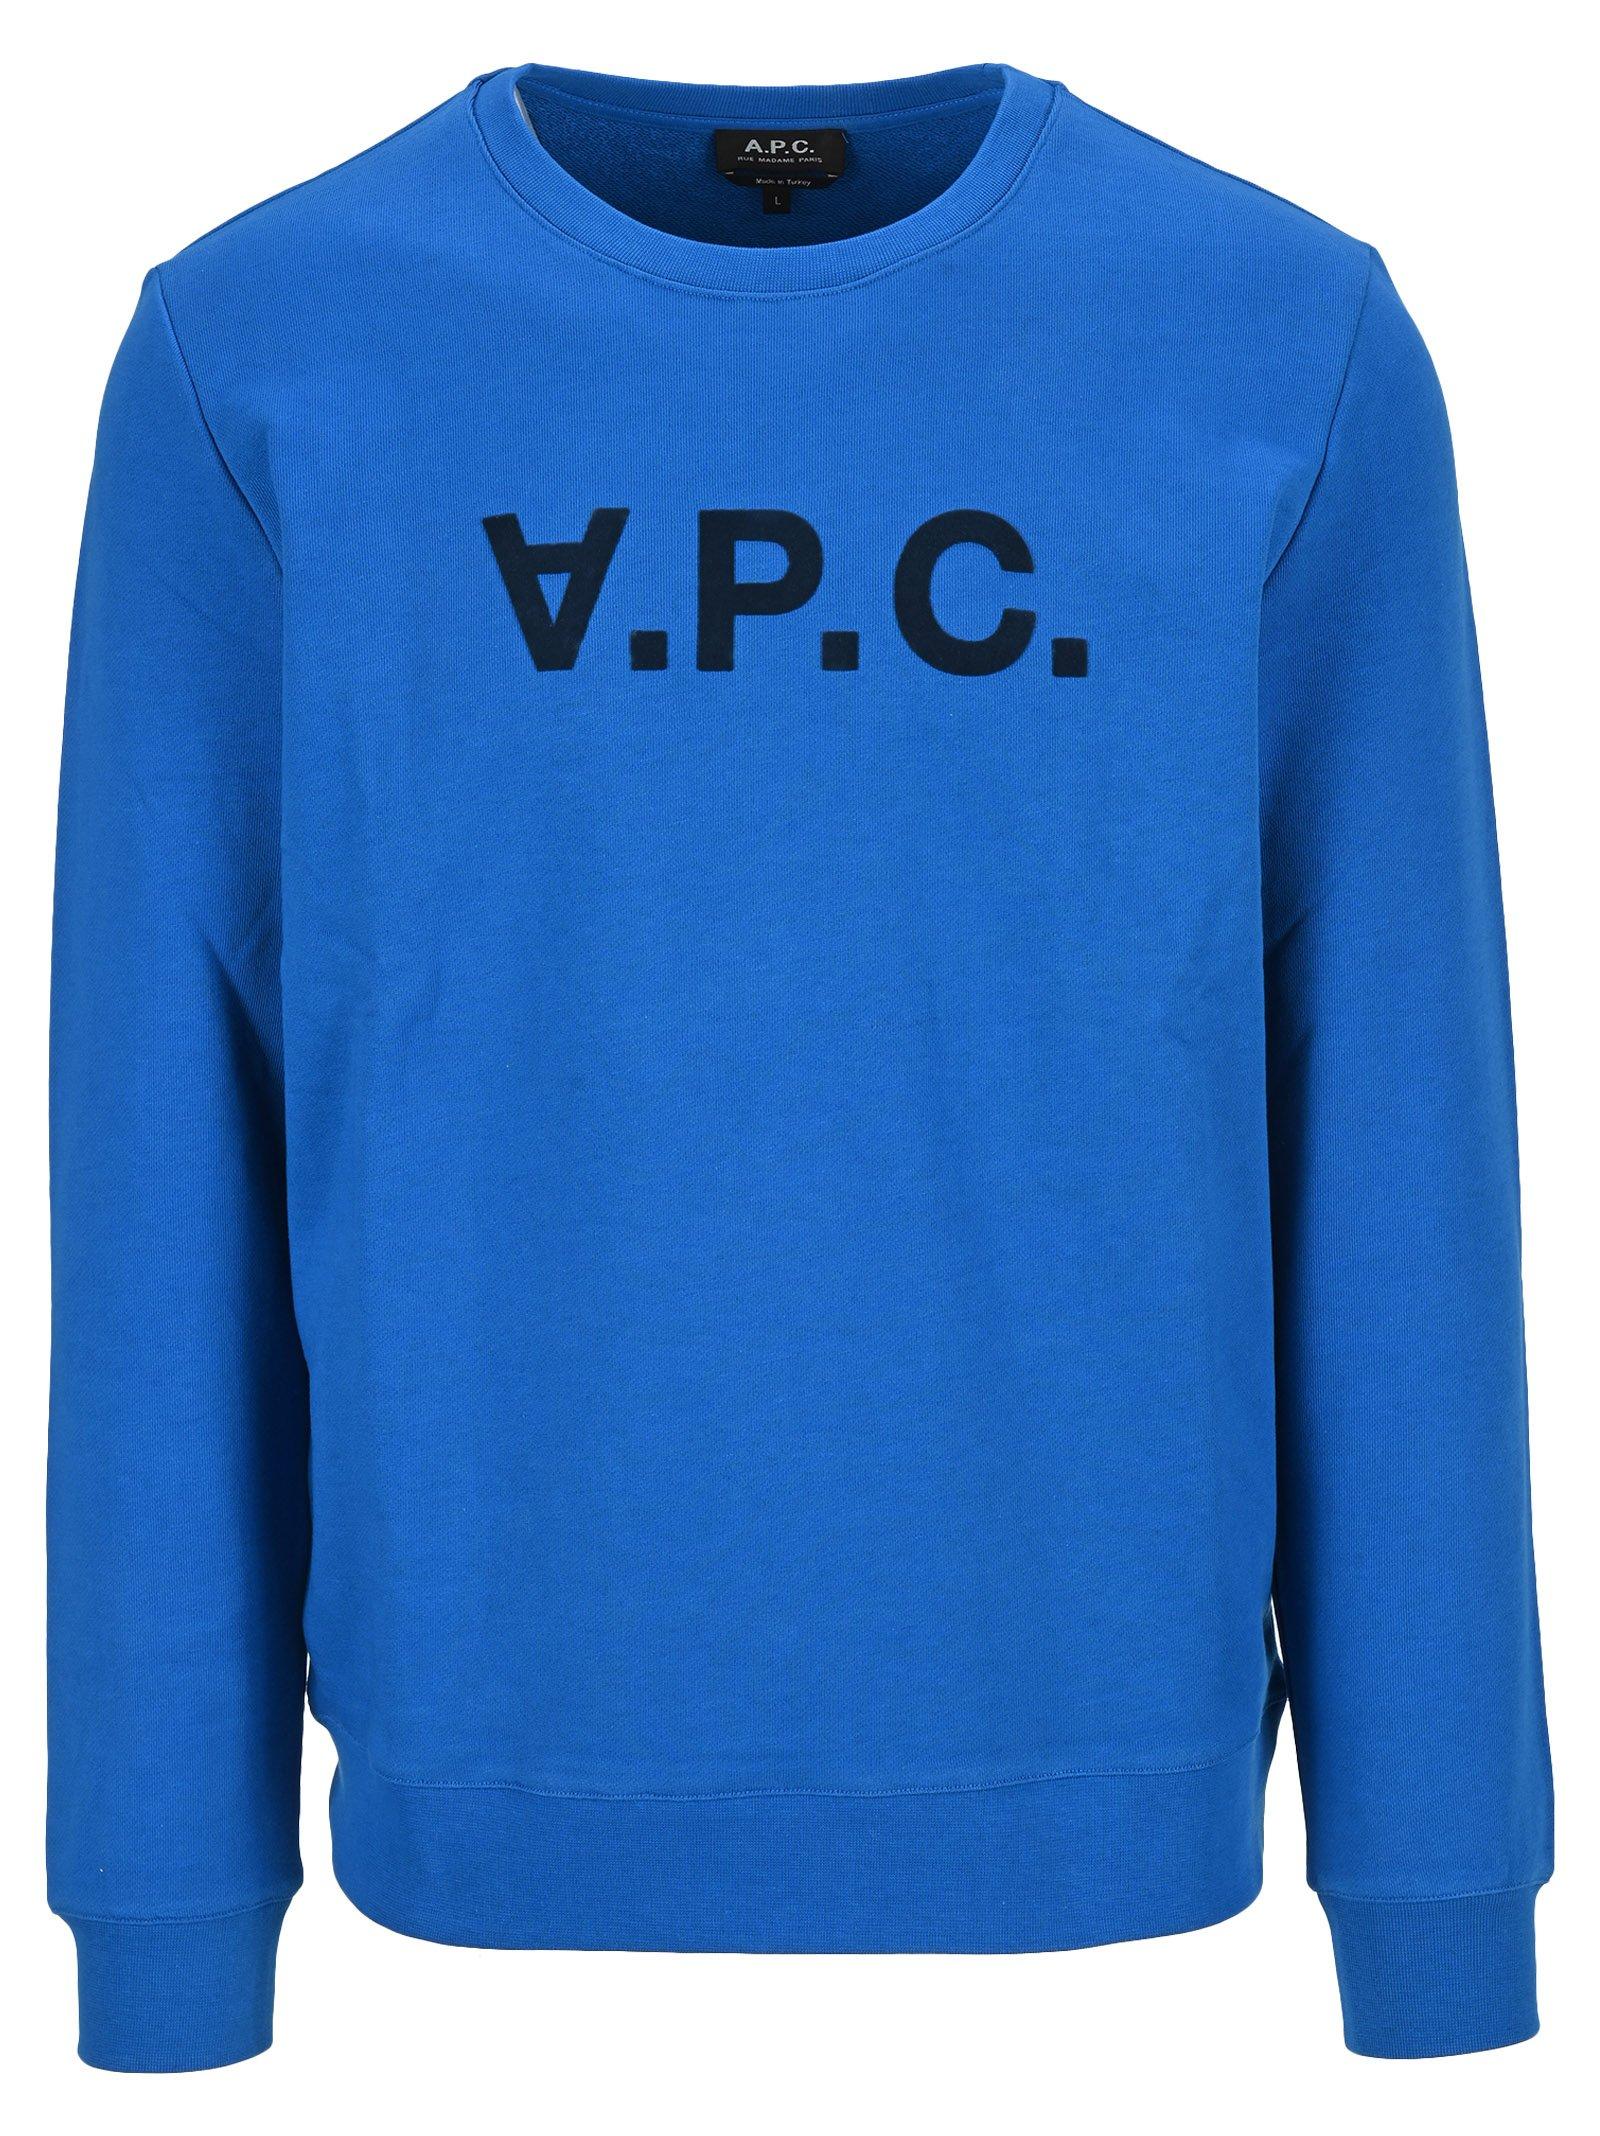 A.P.C. Cotton Vpc Logo Crewneck Sweatshirt in Blue for Men - Lyst